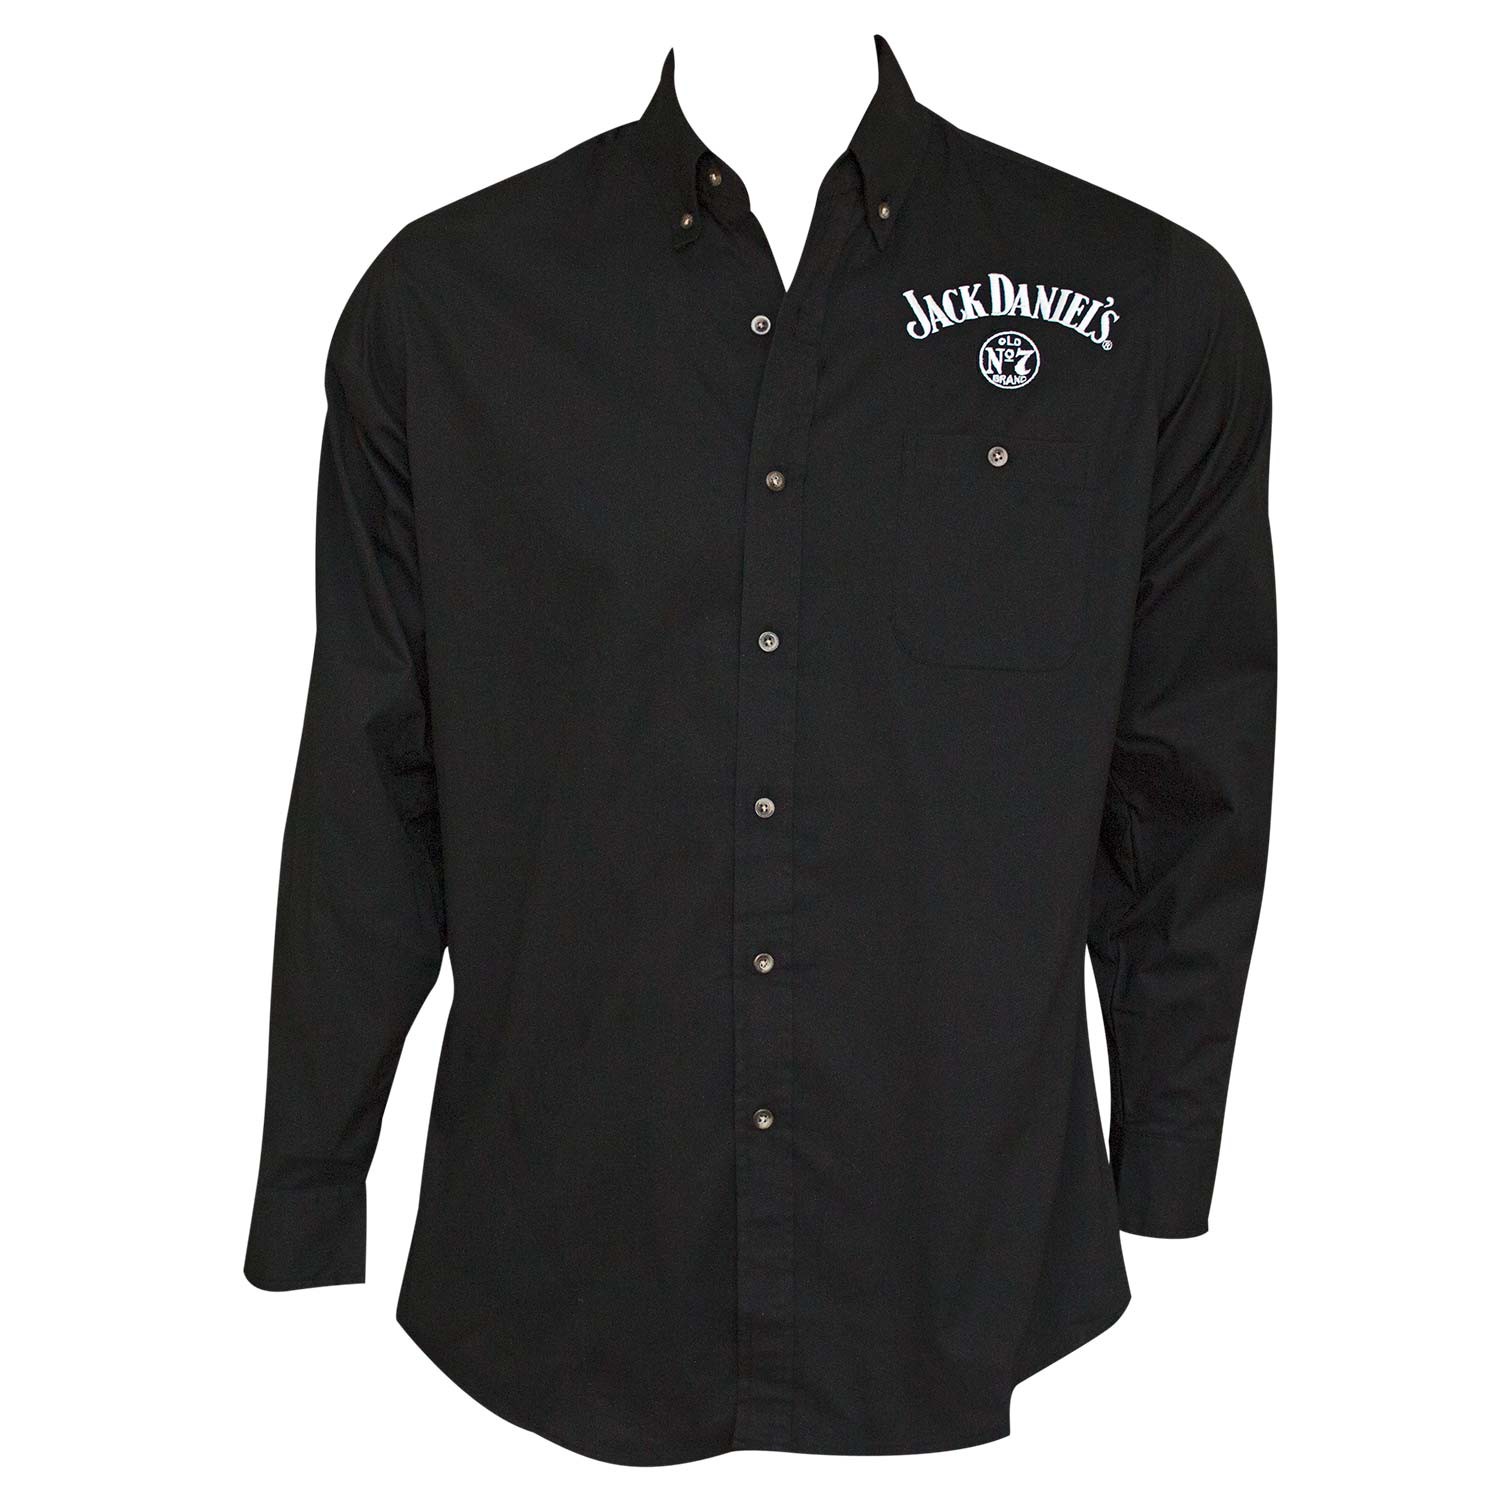 Jack Daniel's Long Sleeve Men's Black Button Up Shirt